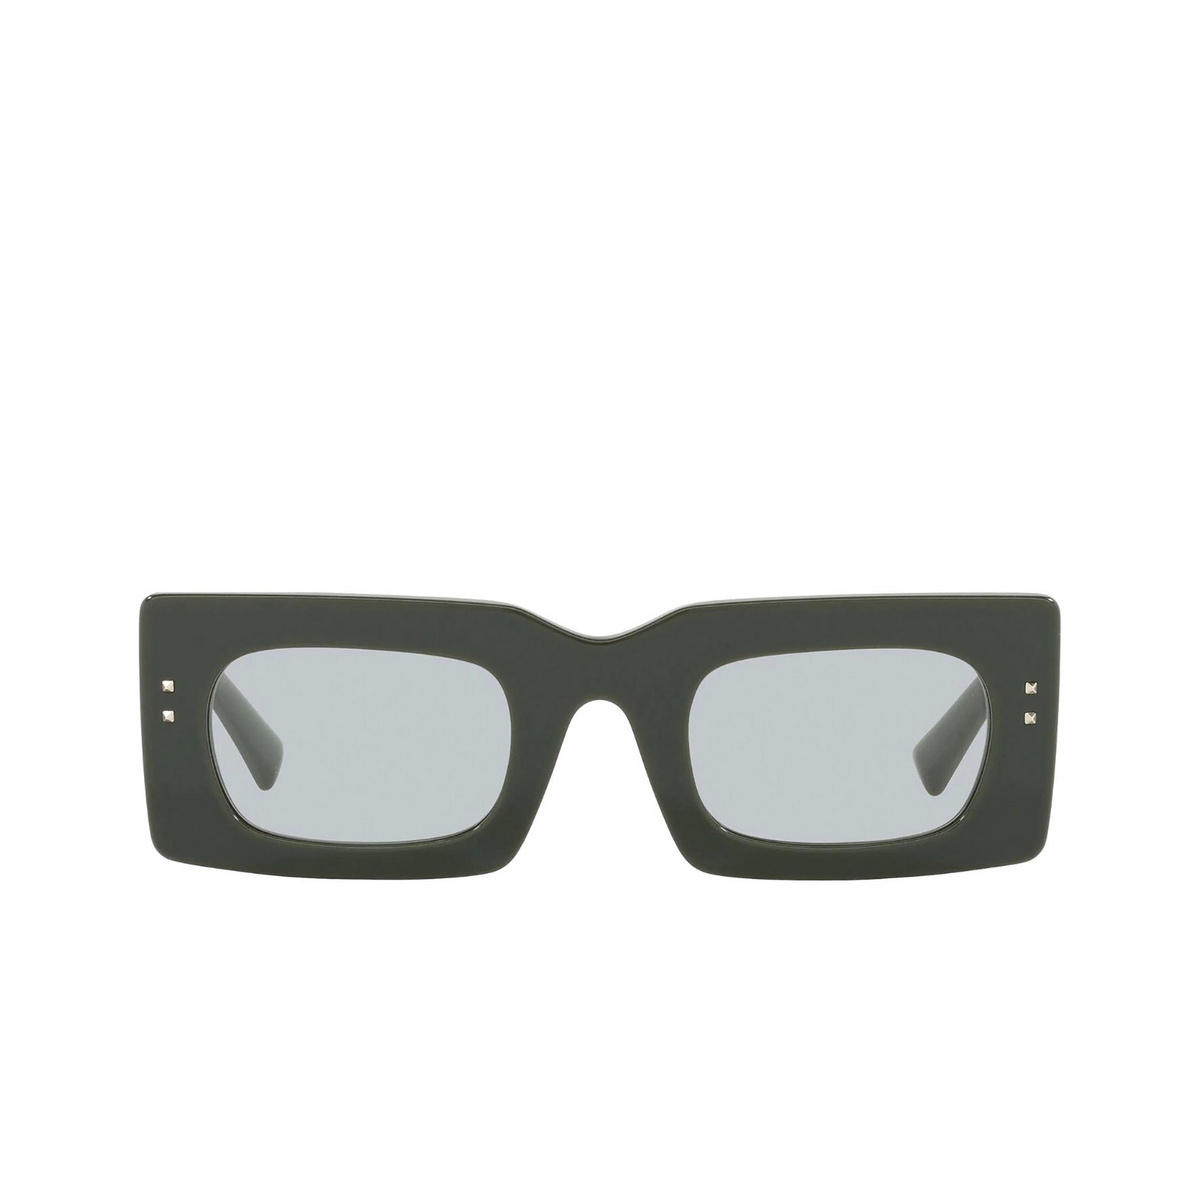 Valentino® Rectangle Sunglasses: VA4094 color Green 517687 - front view.